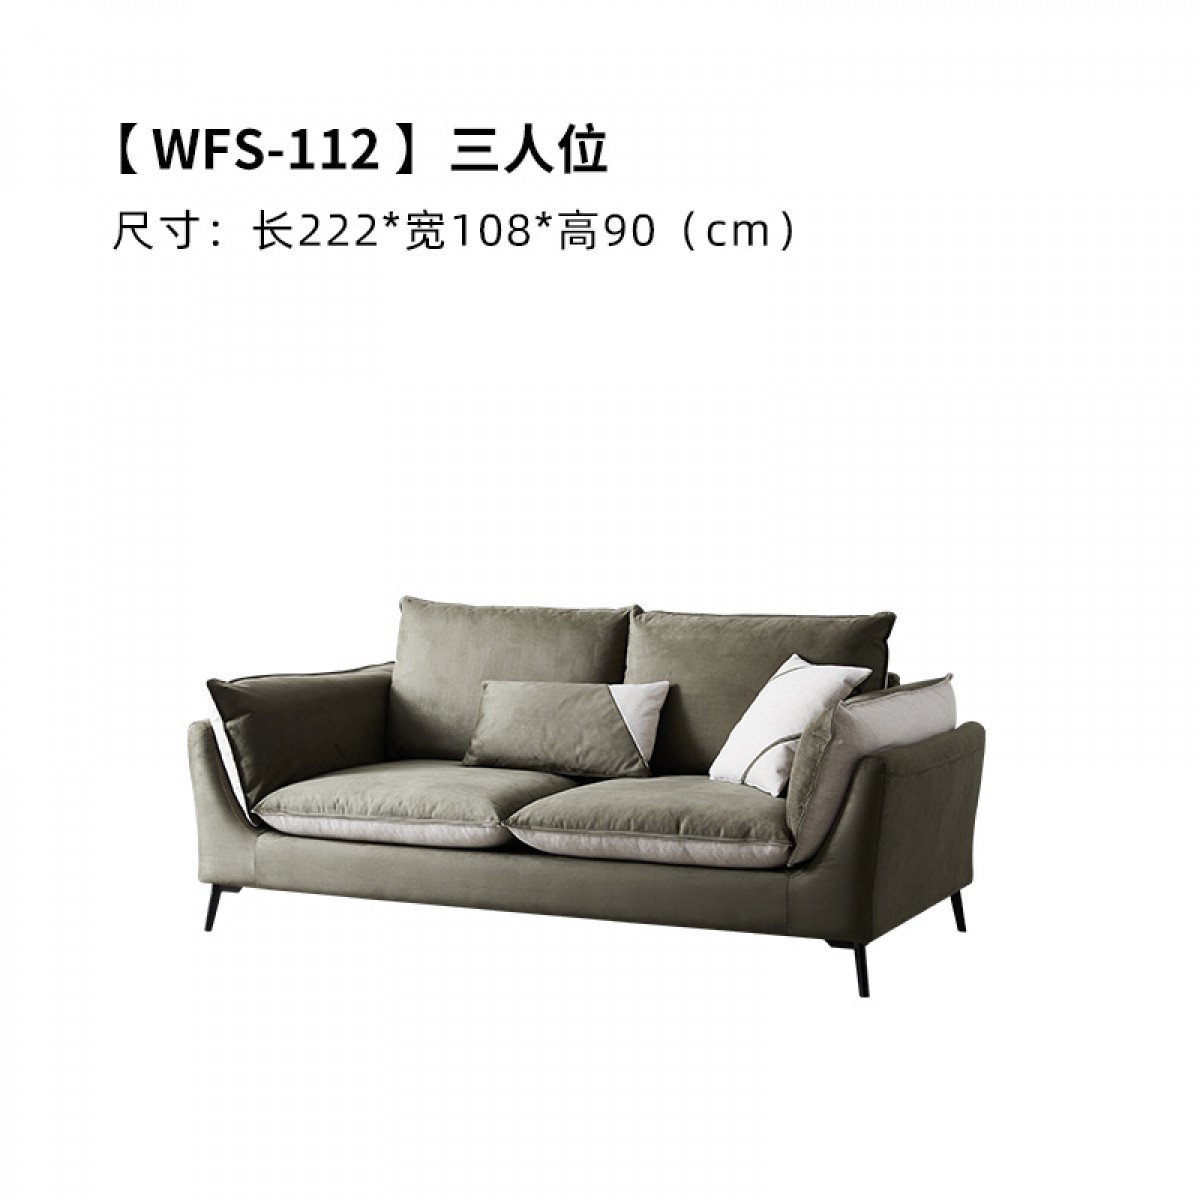 ARIS爱依瑞斯意式极简轻奢沙发小户型客厅家具布艺沙发三人位WFS-112